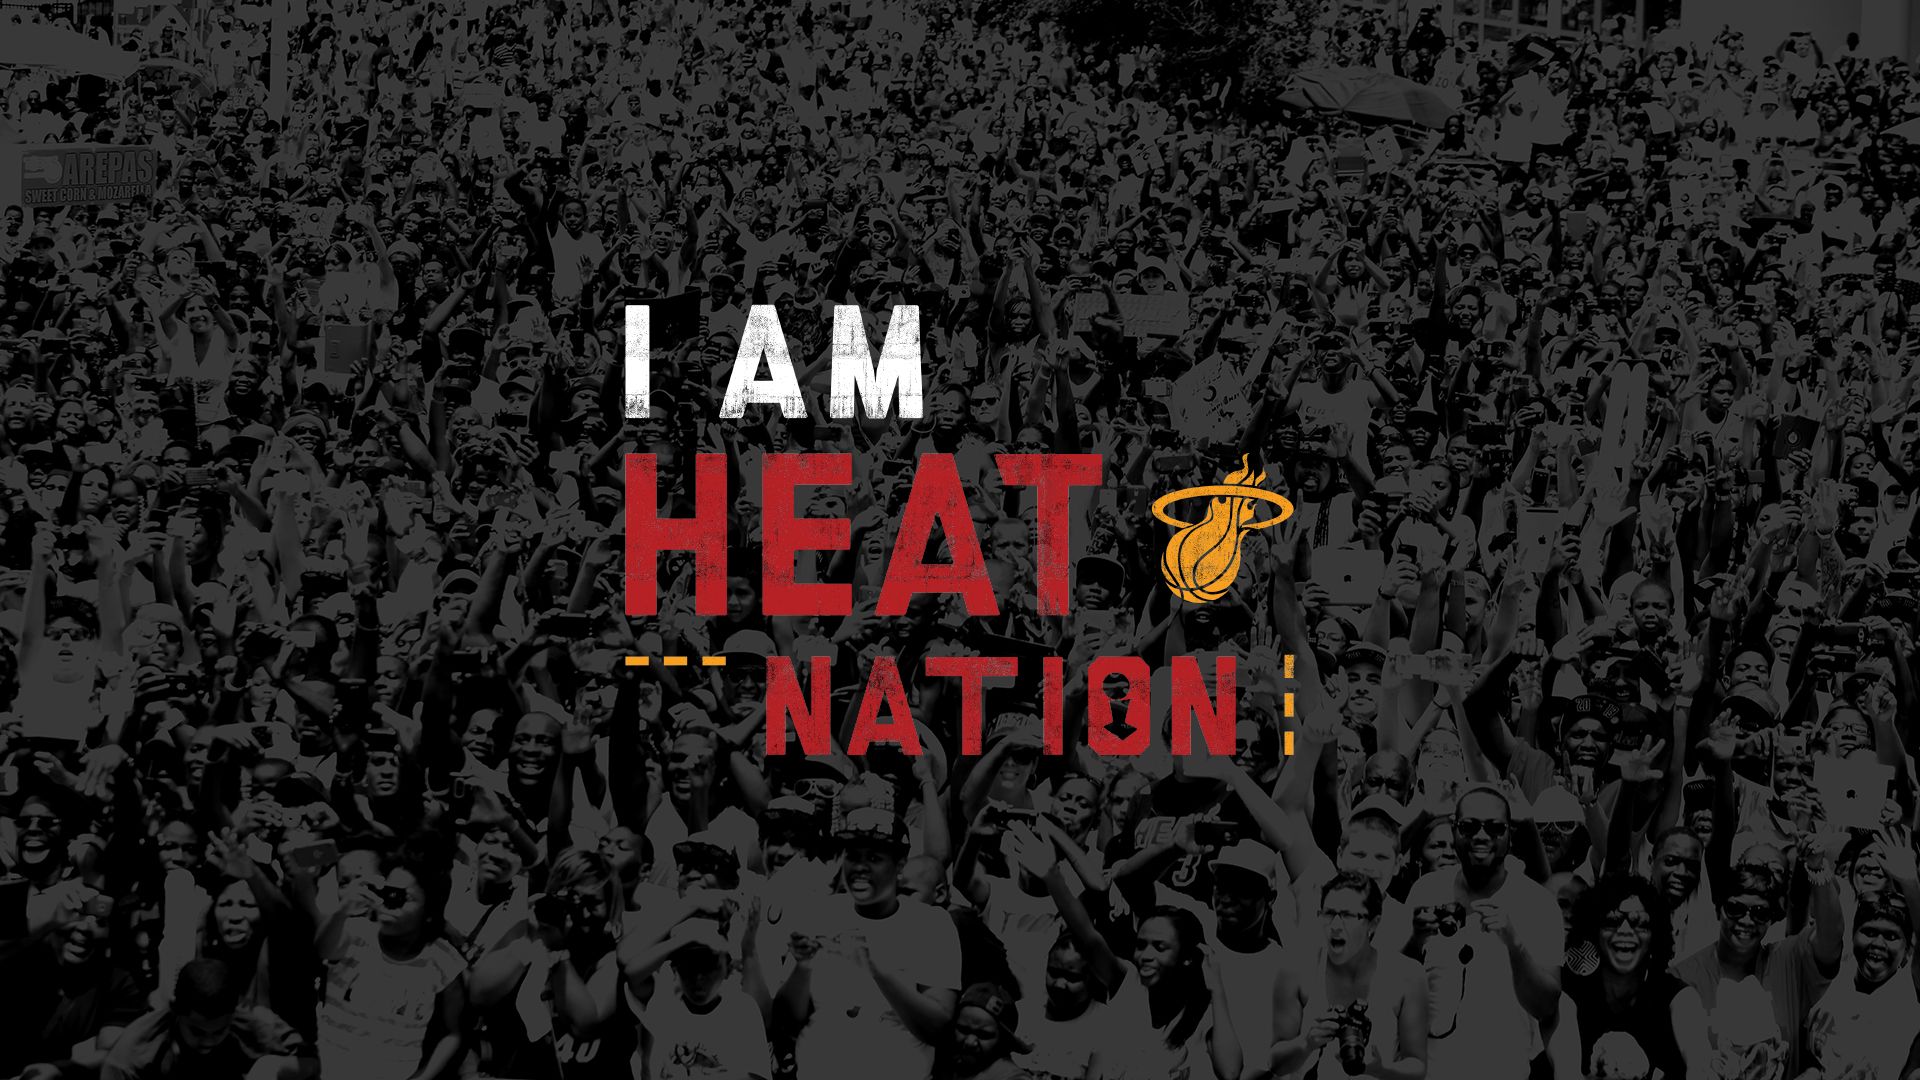 Miami Heat Roster Image Image